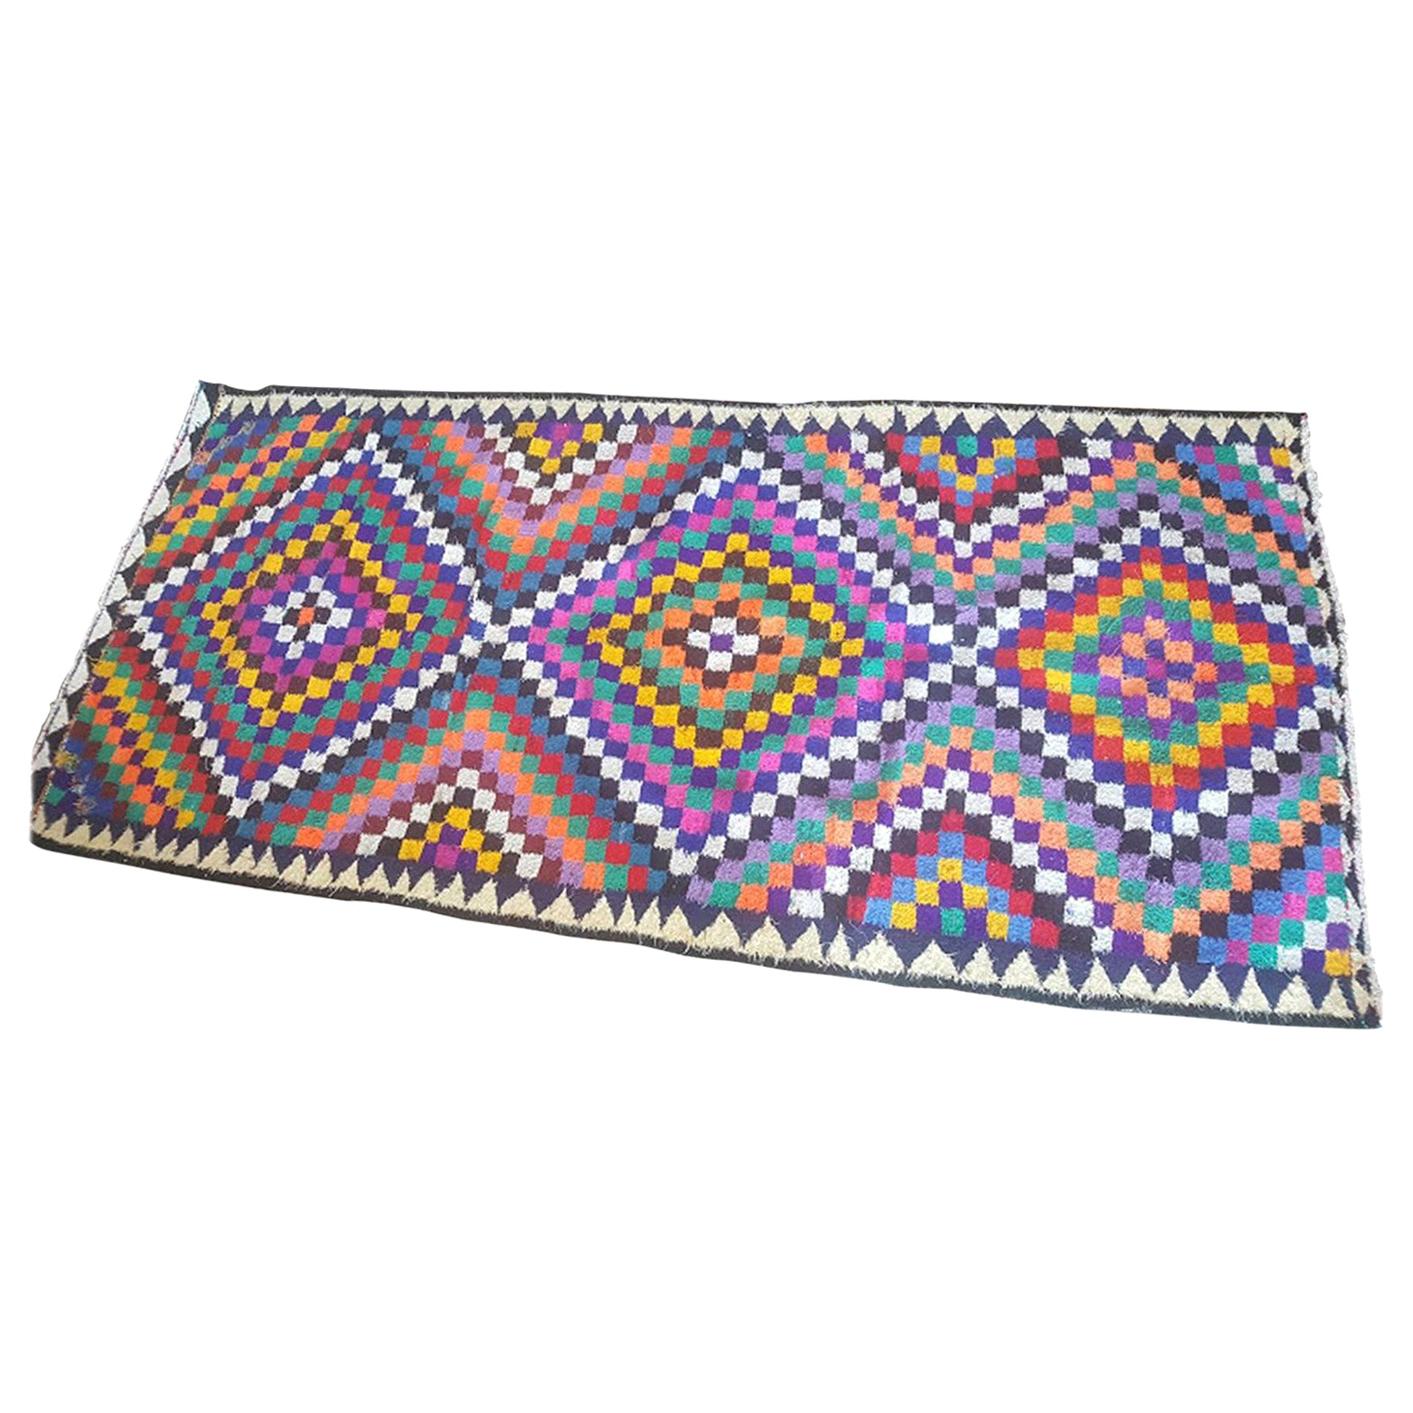 Big Colorful Vintage Carpet, Boho Style Rug, Similar to Kilim